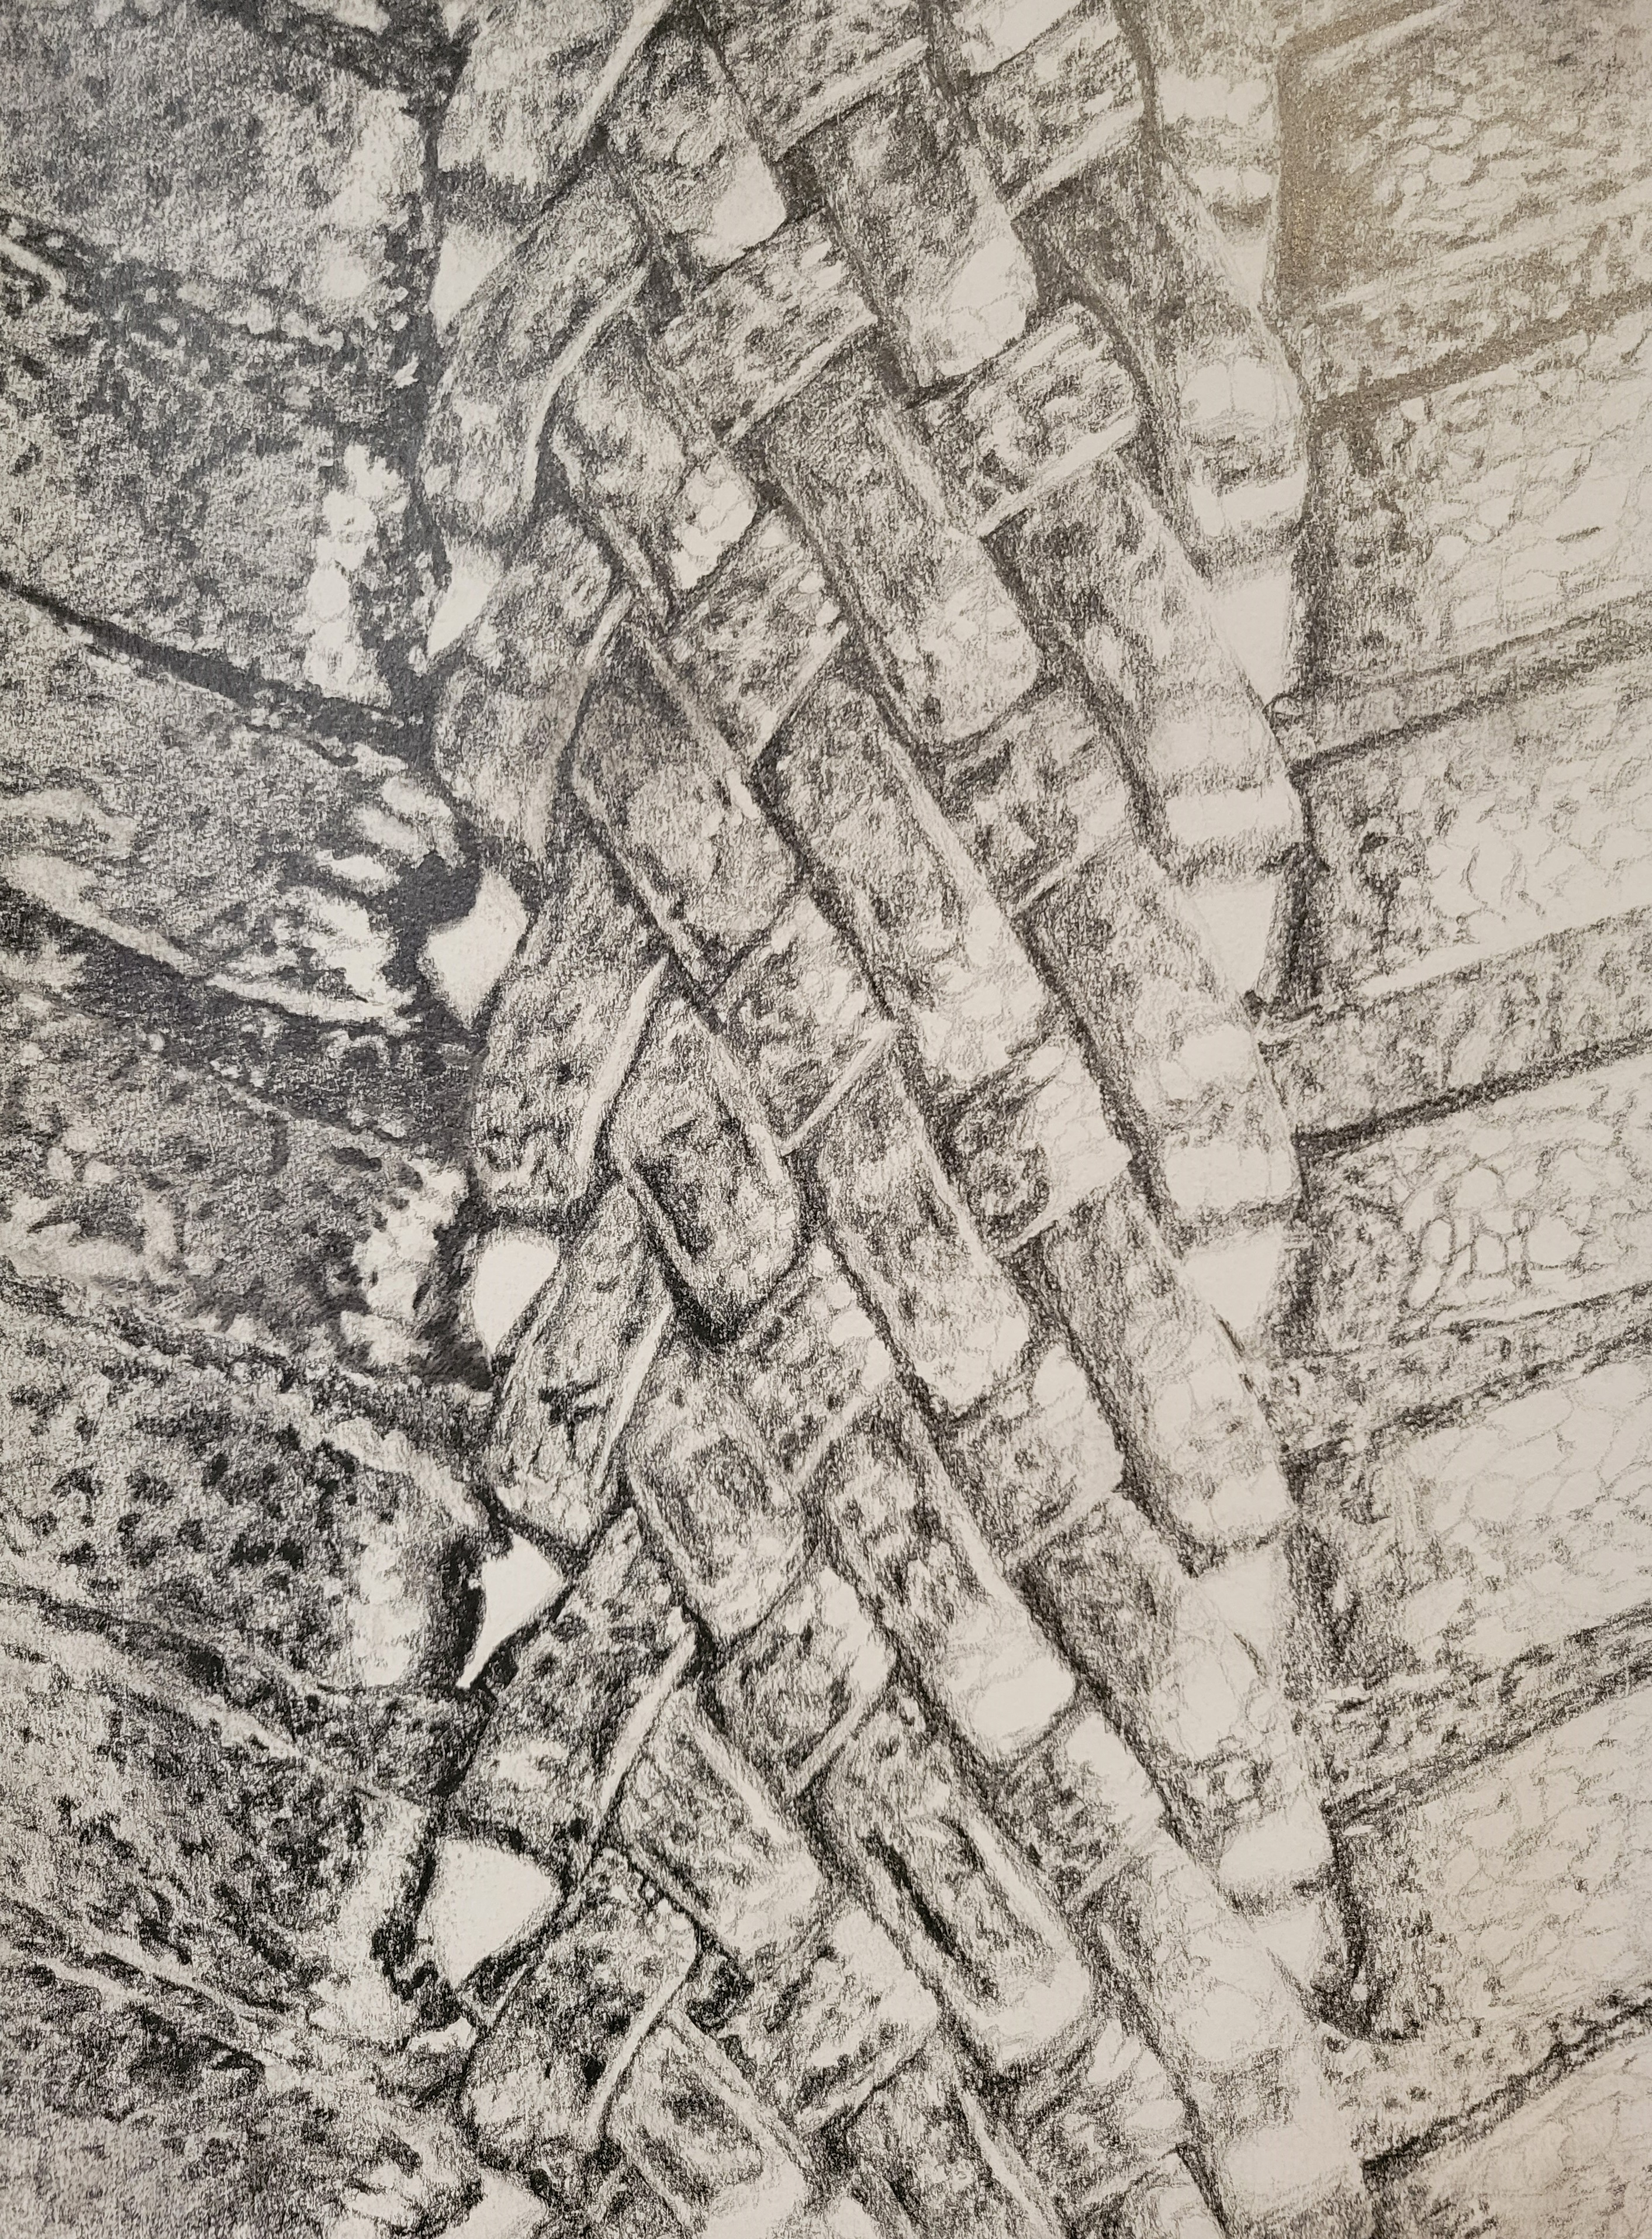 A close up sketch of a braided belt